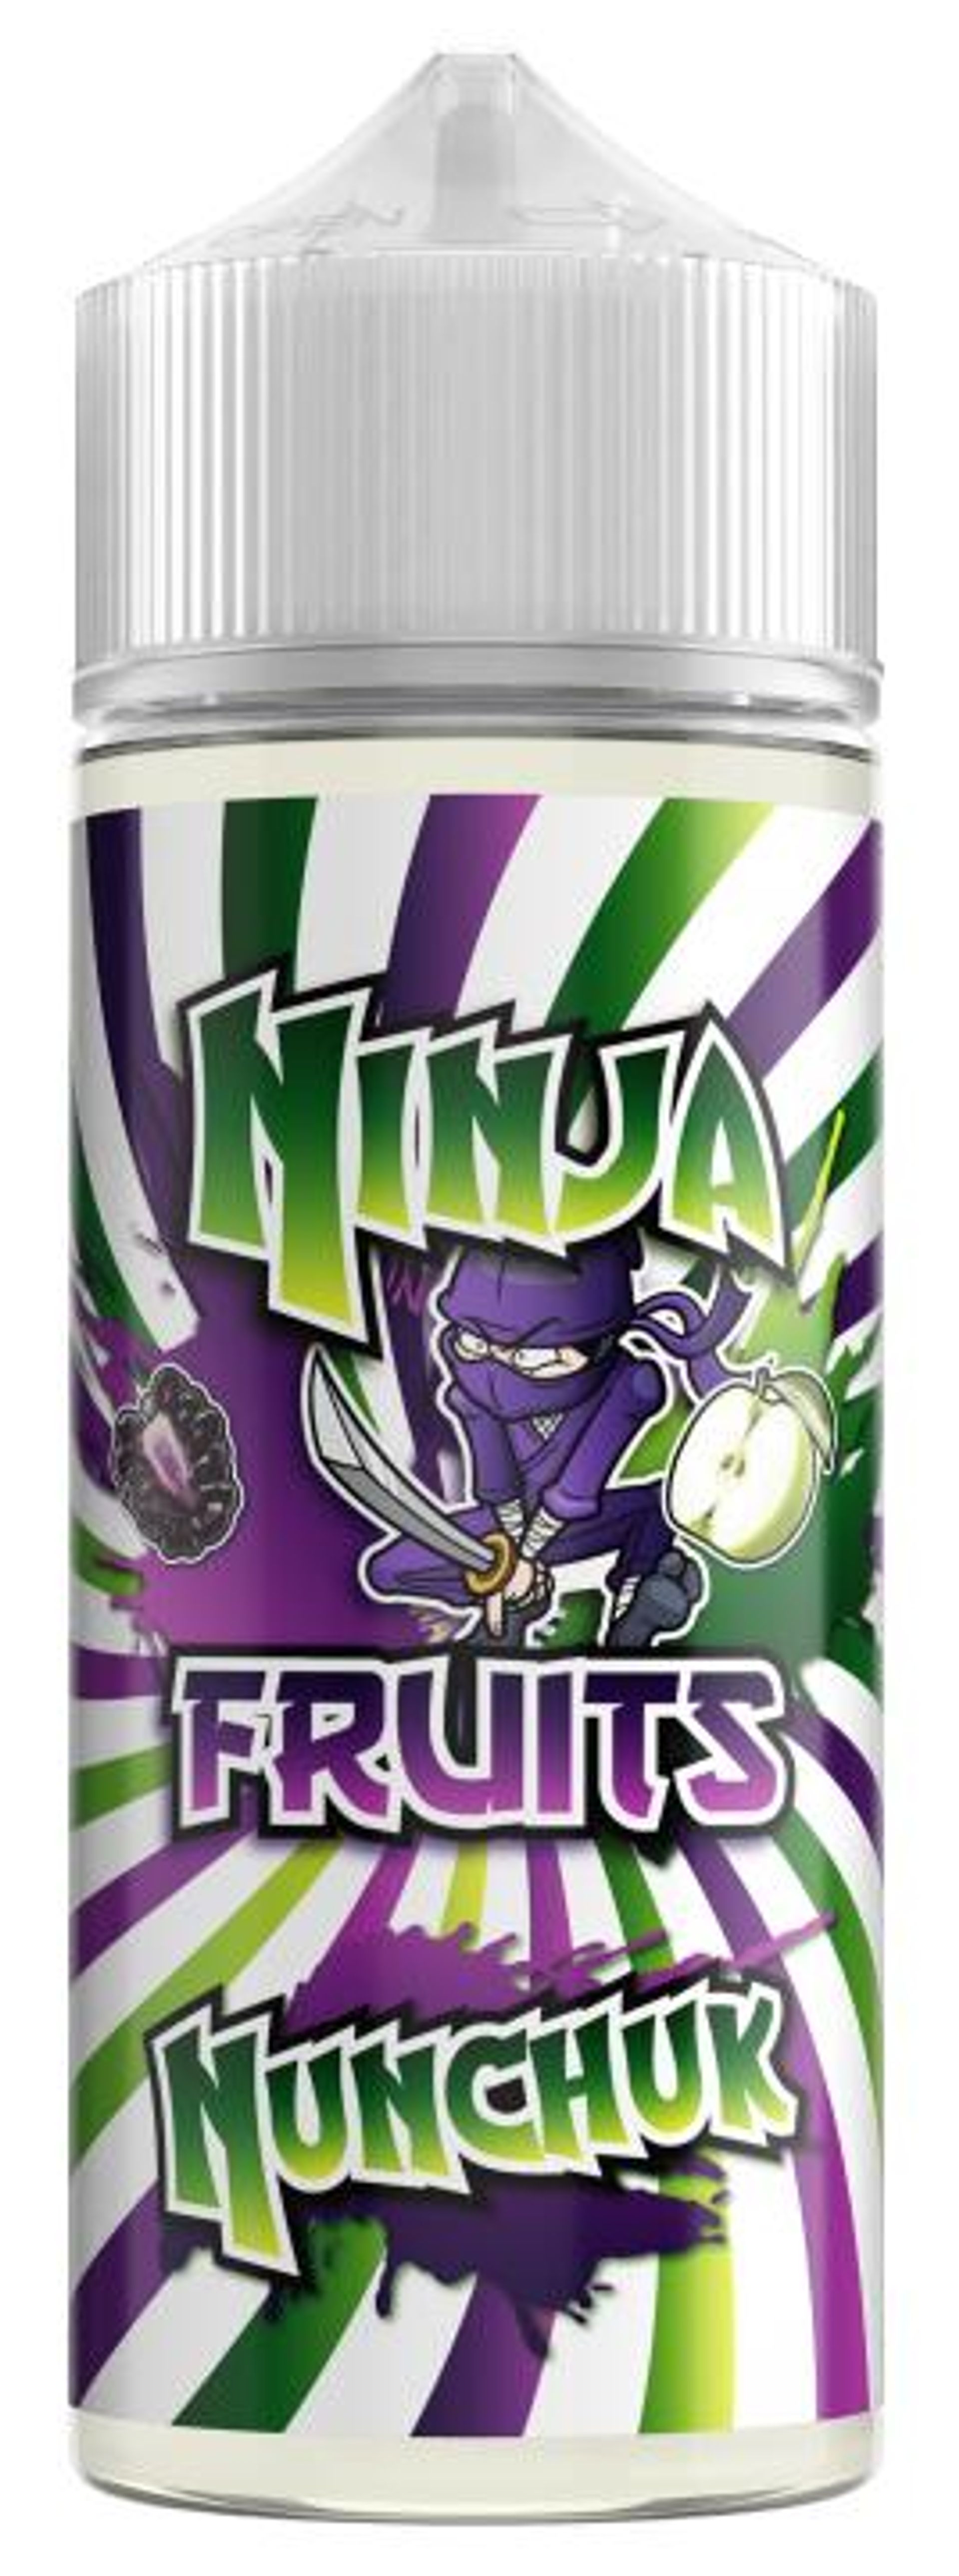 Image of Nunchuk by Ninja Fruits